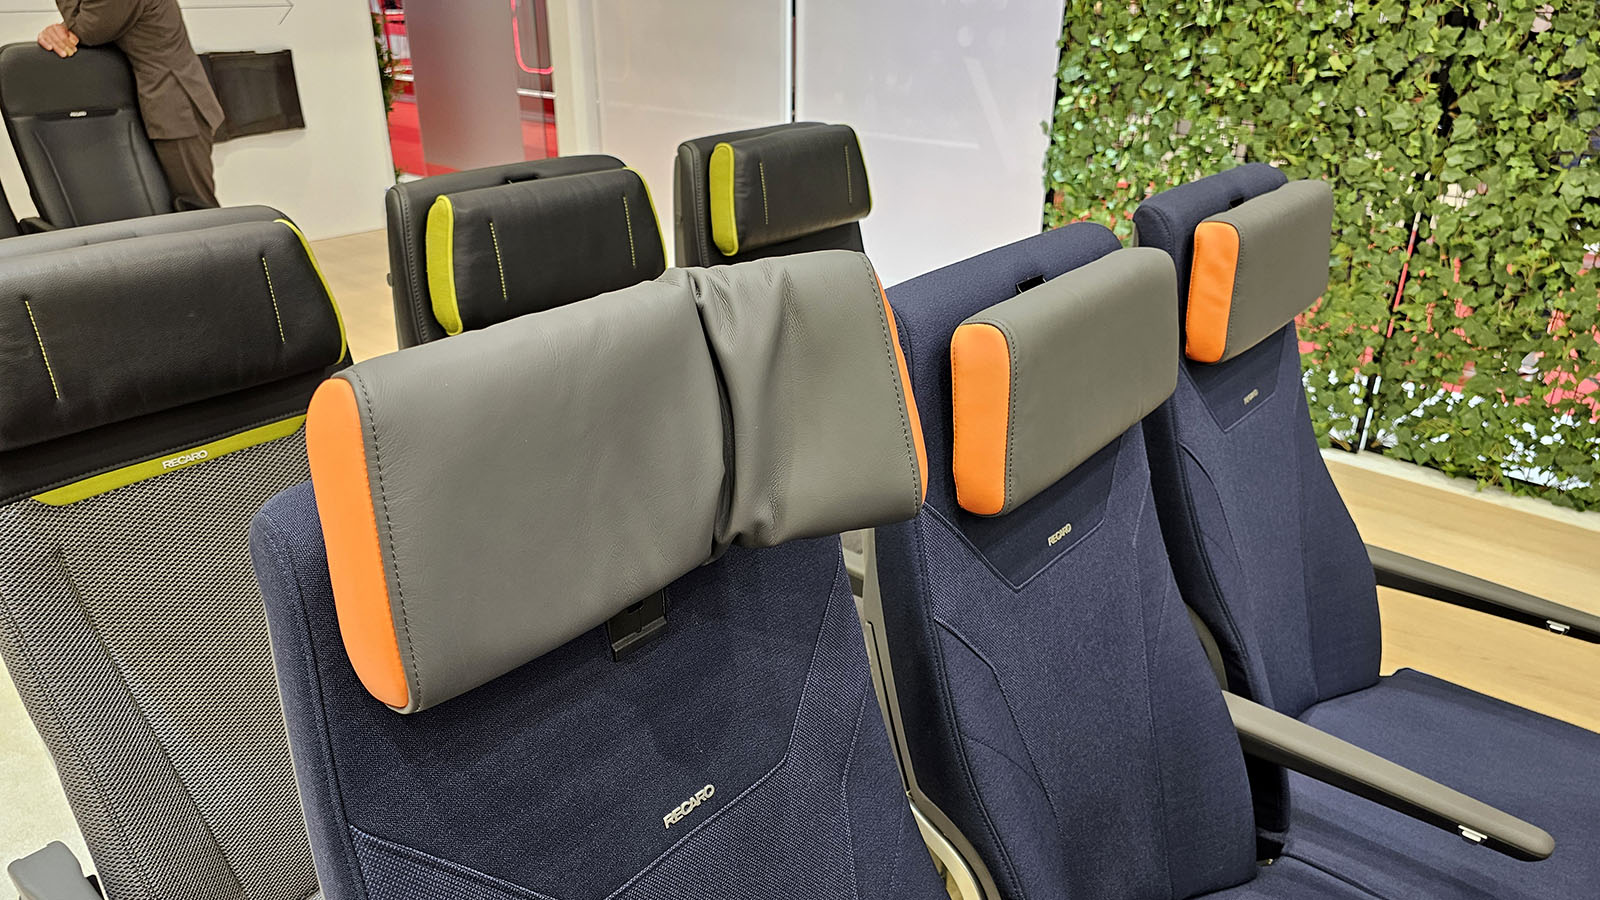 Tilt the headrest on Qantas' Project Sunrise Economy seat